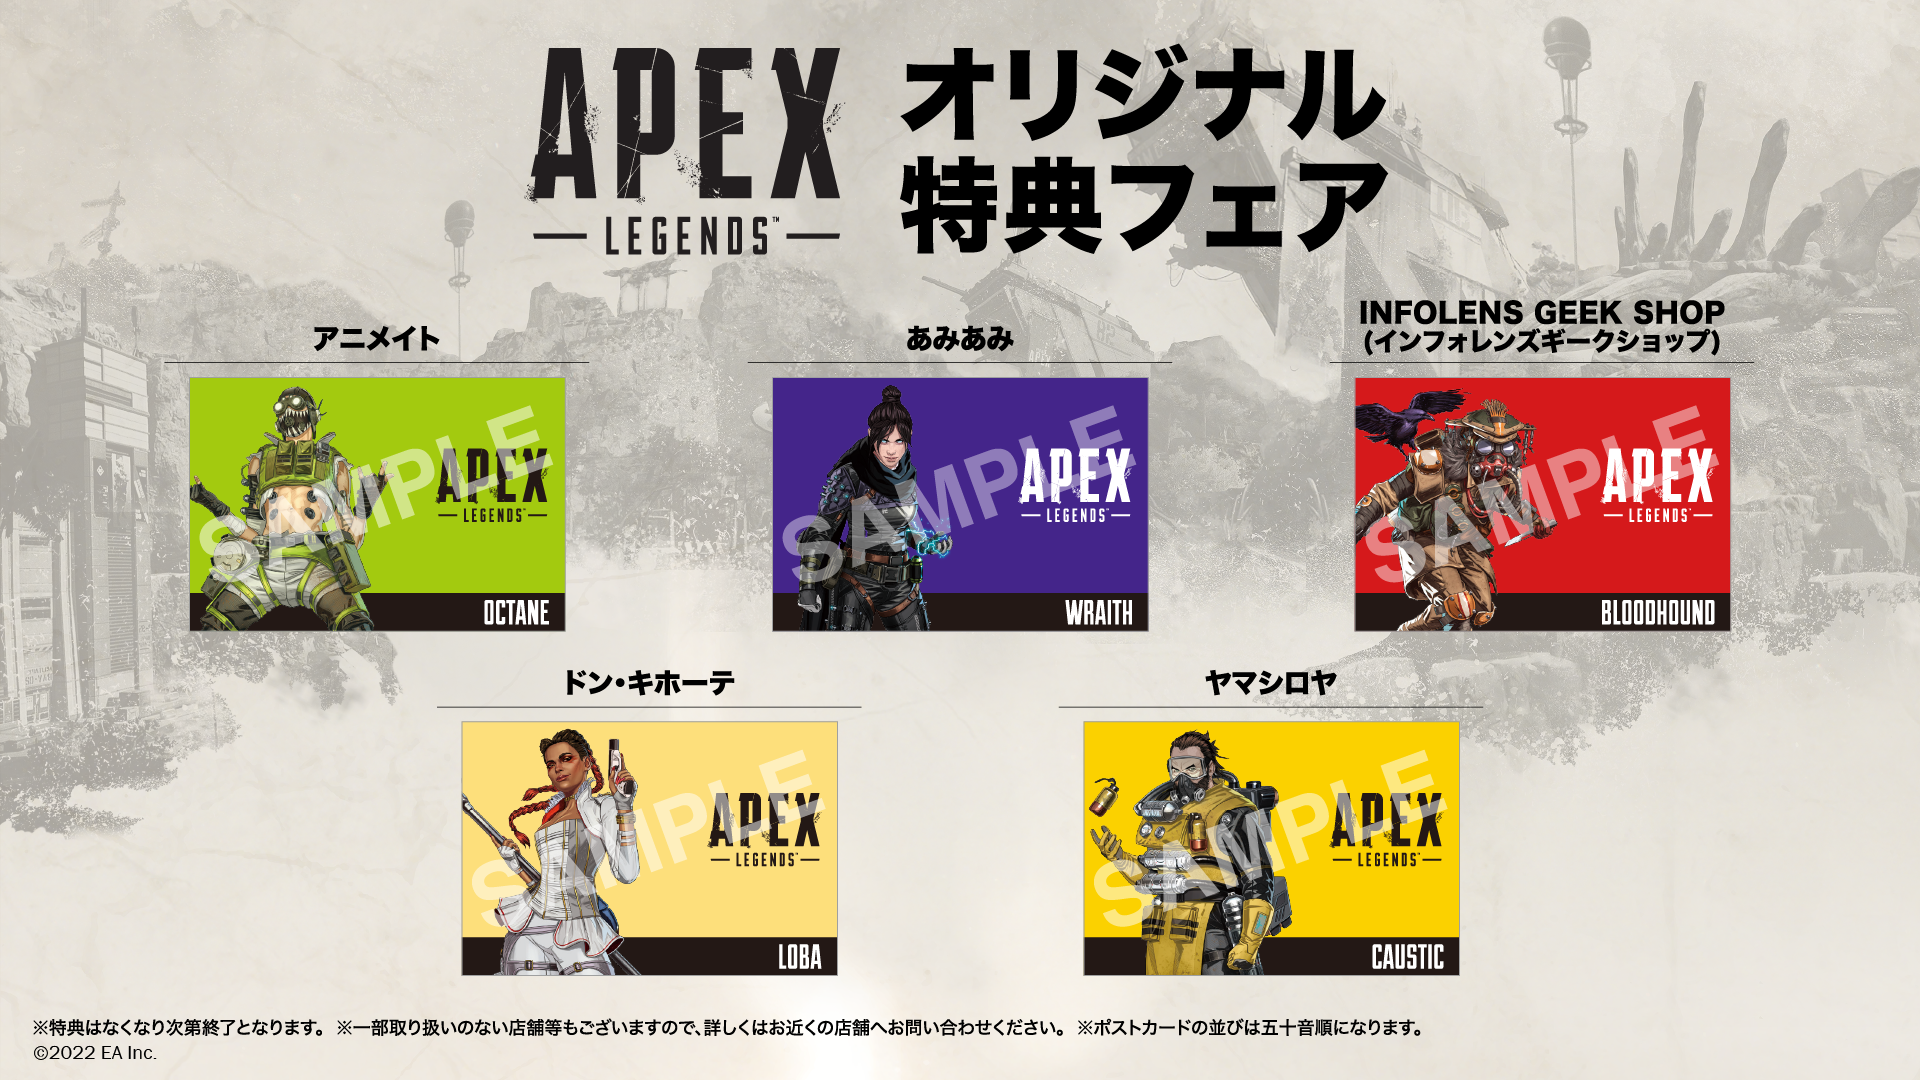 「Apex Legends(TM)」オリジナル特典フェア開催決定！
対象商品購入で店舗ごとに異なる
オリジナルポストカードをプレゼント！